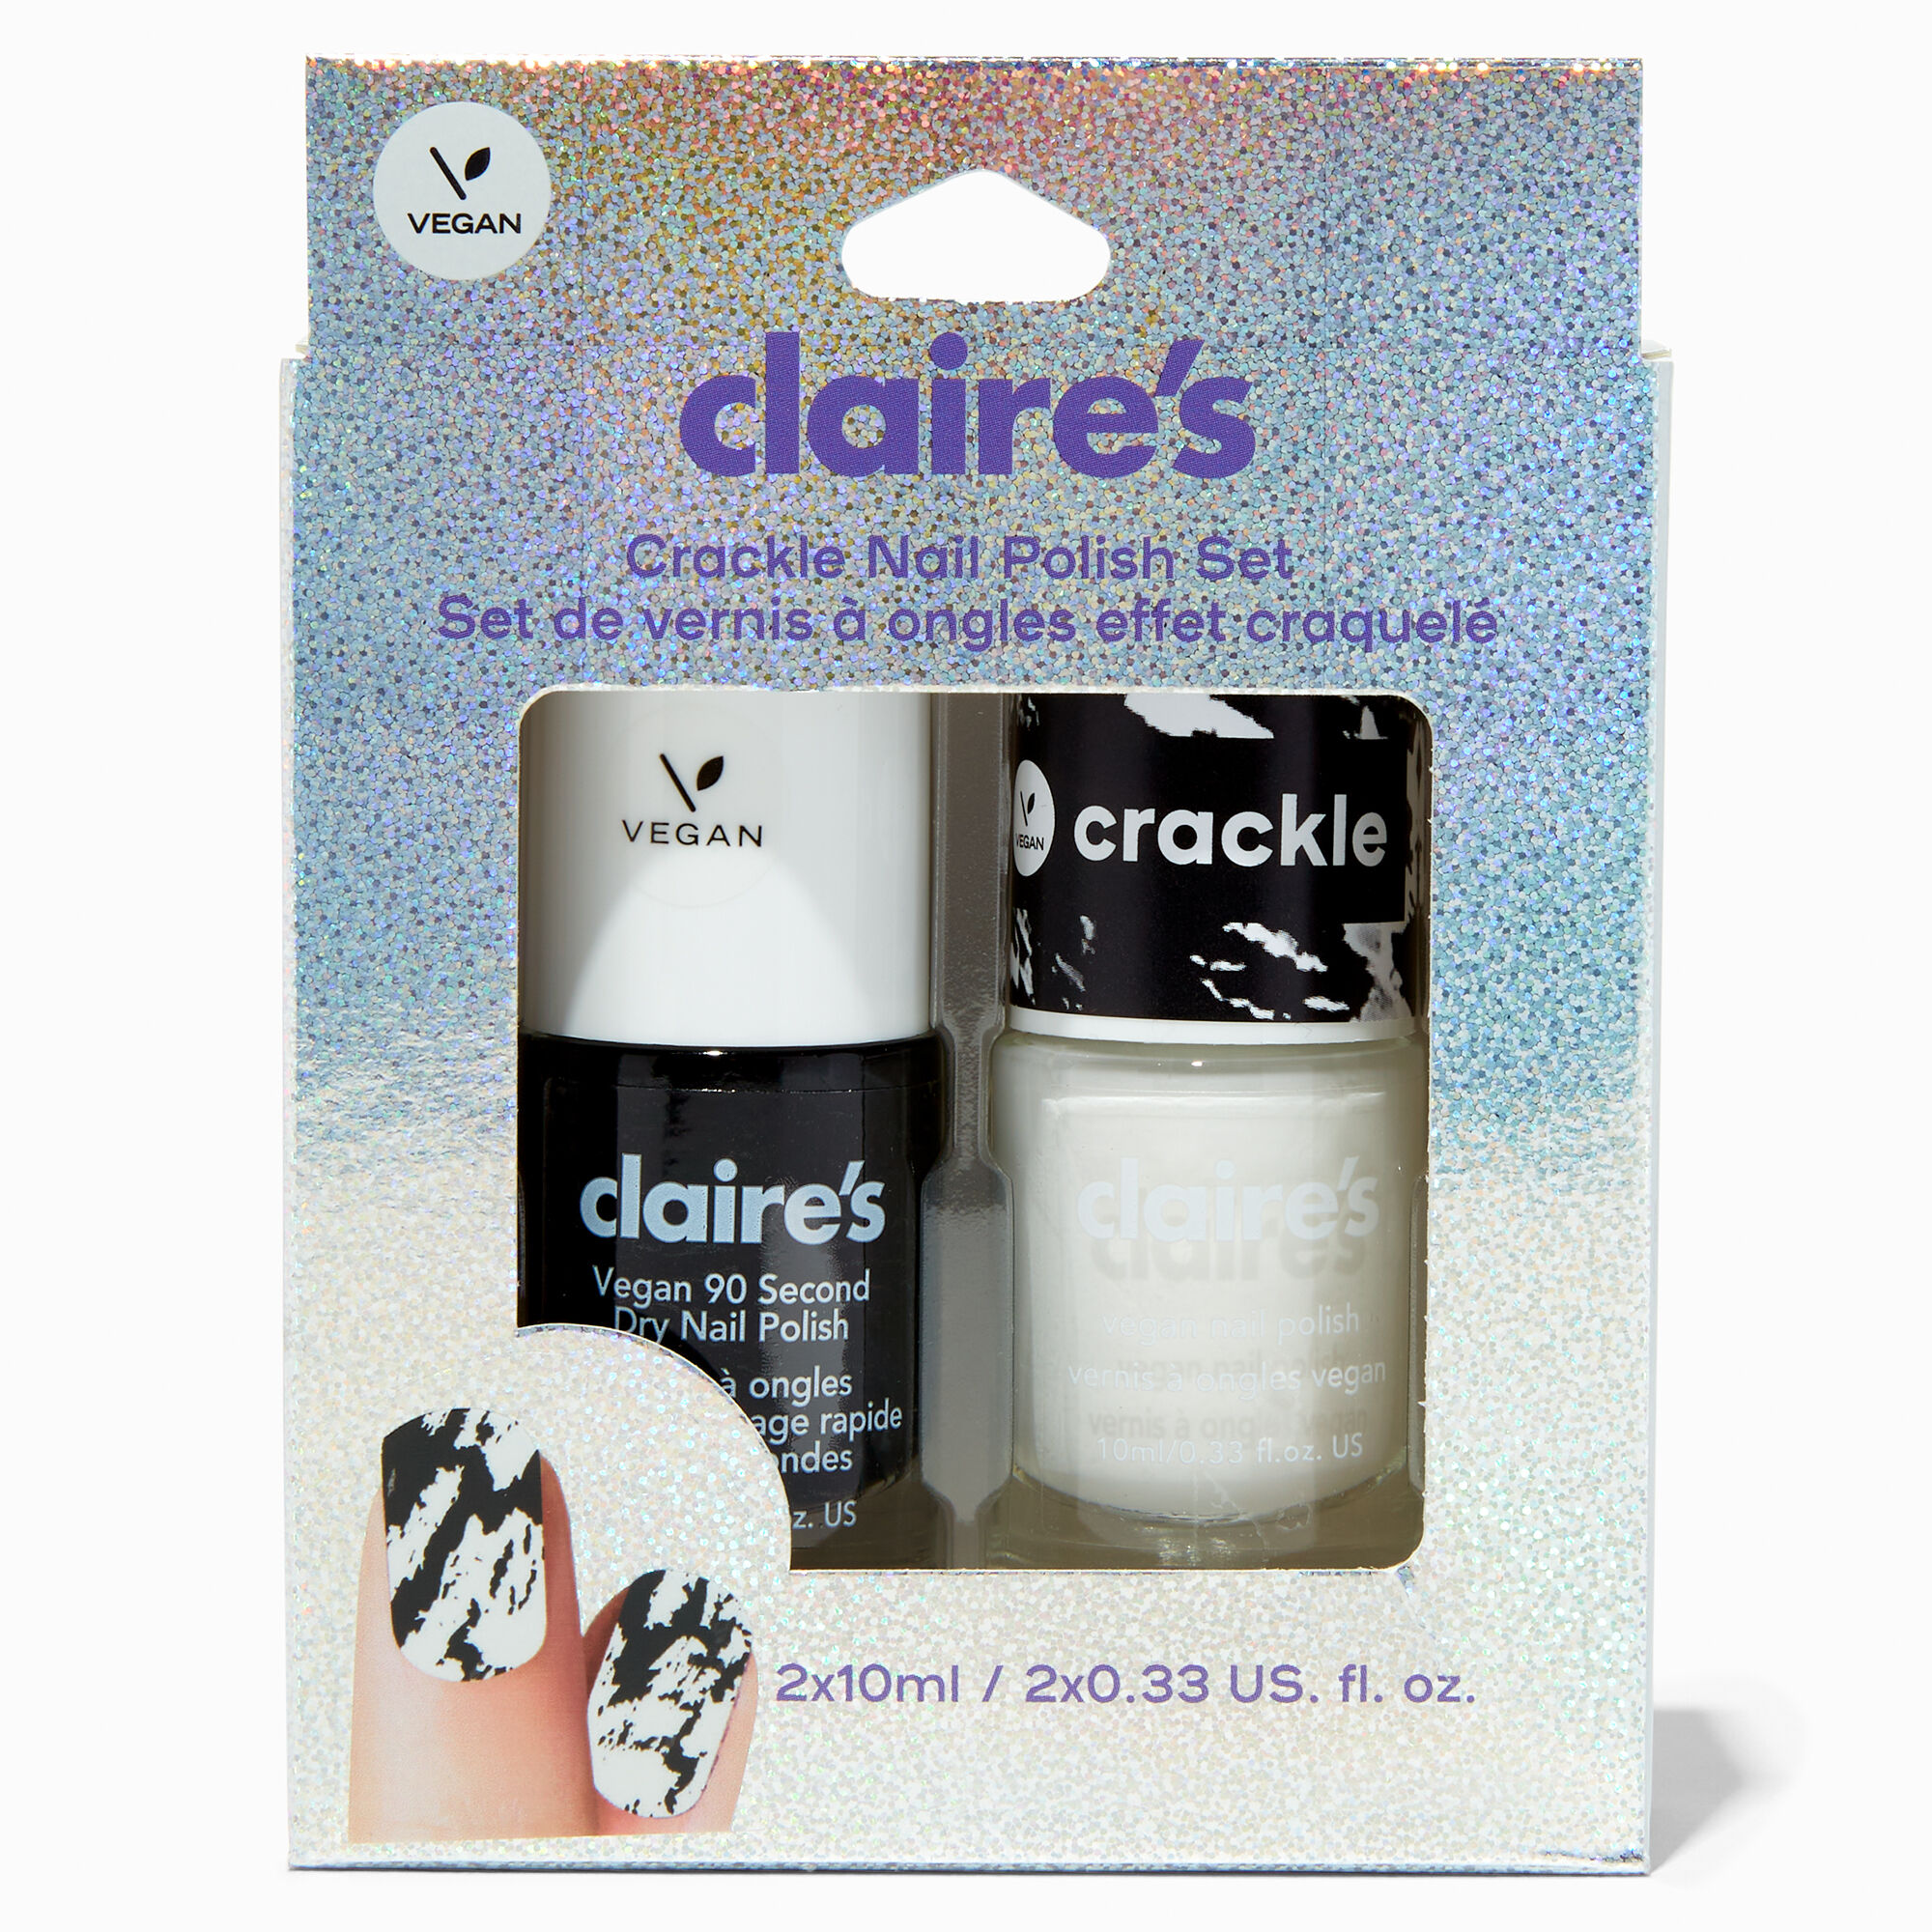 View Claires Black Crackle Vegan Nail Polish Set 2 Pack White information